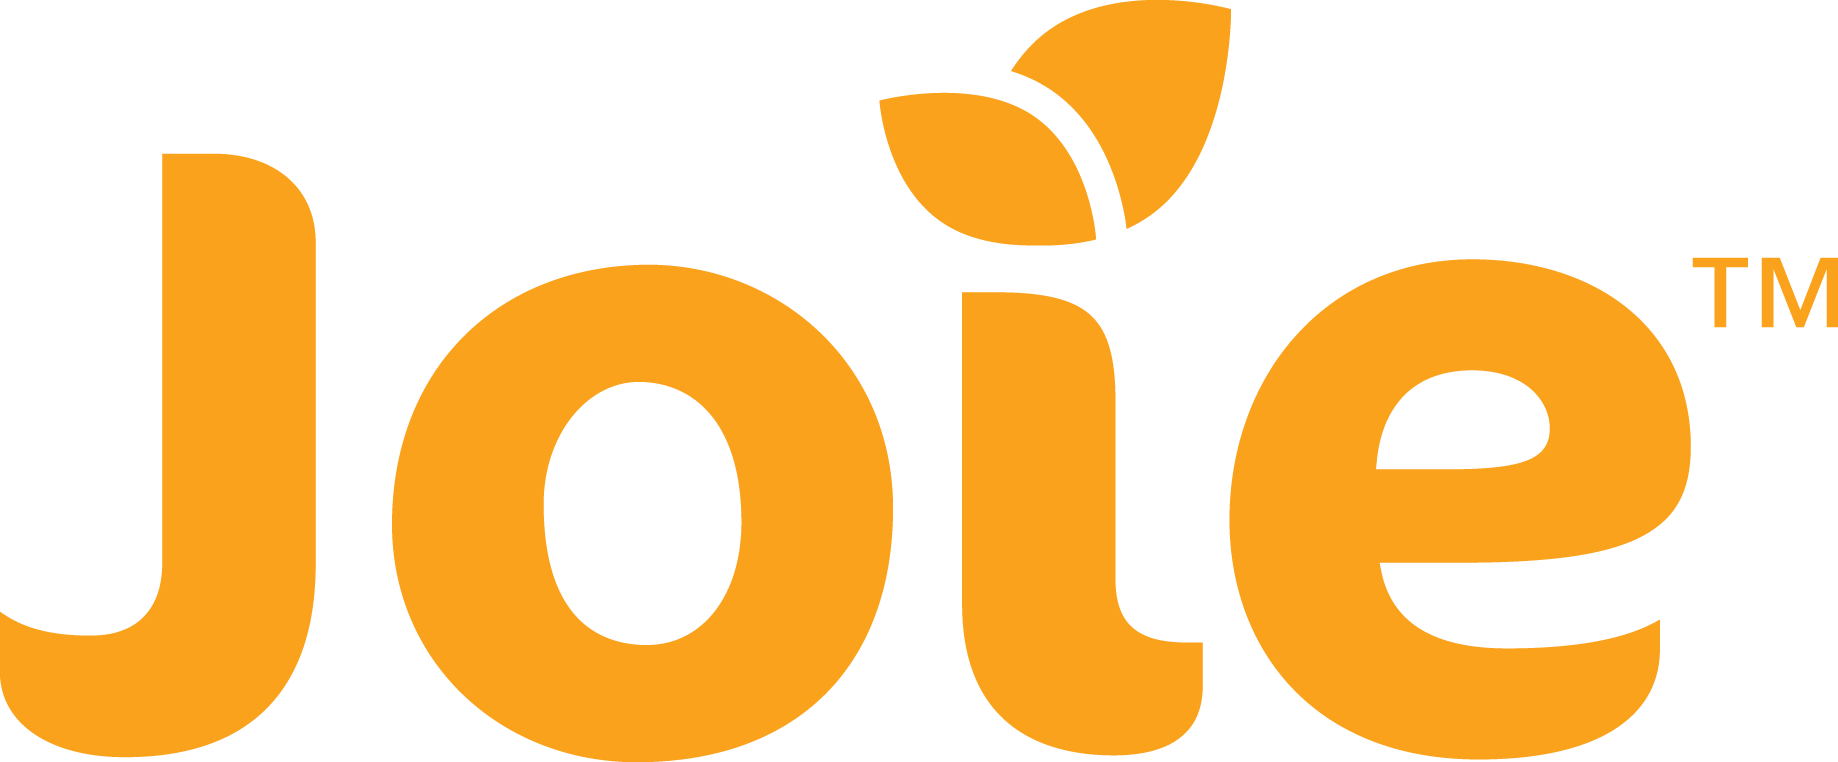 Joie Logo - Joie | Explore Joie